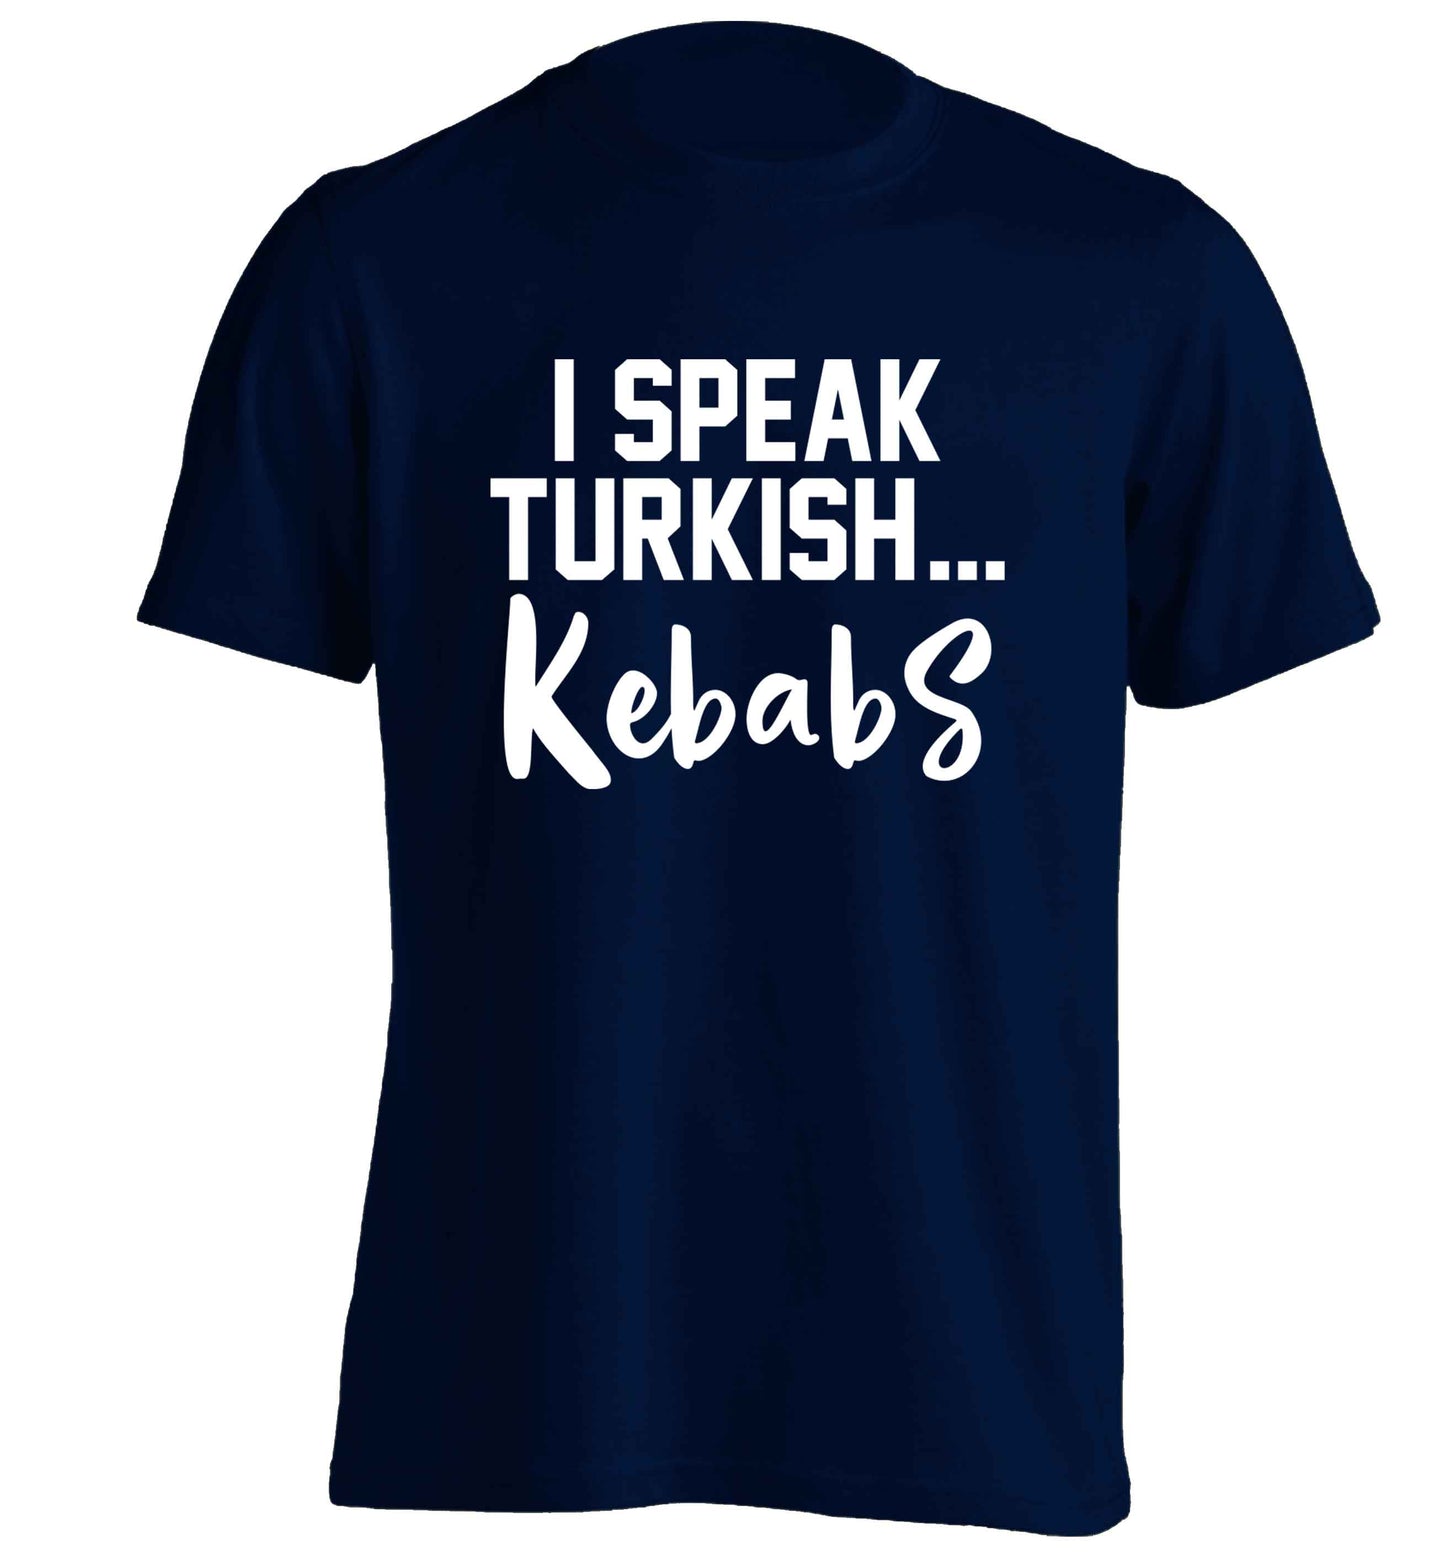 I speak Turkish...kebabs adults unisex navy Tshirt 2XL